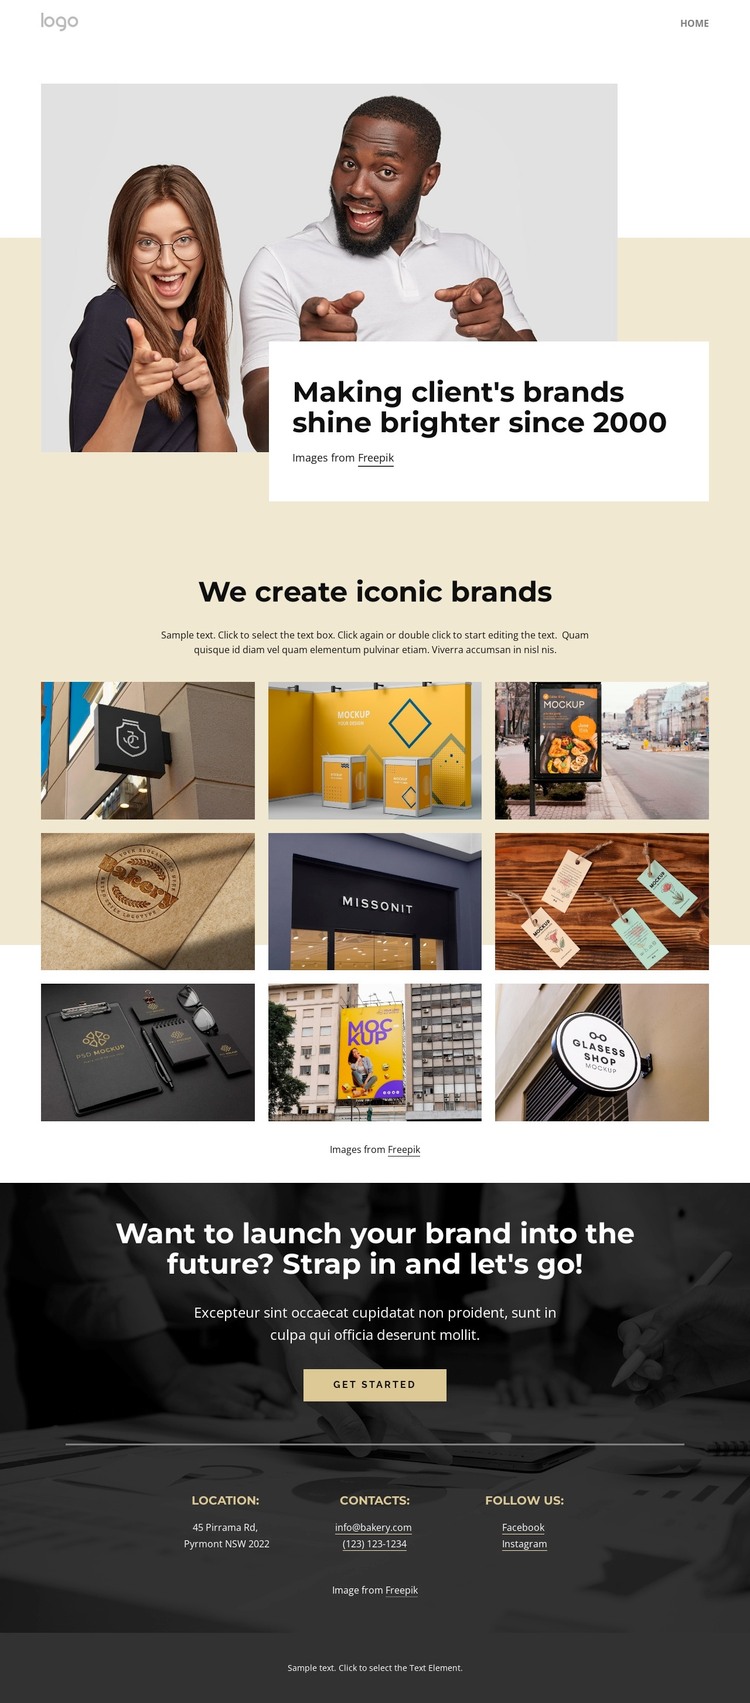 We create iconic brands WordPress Theme